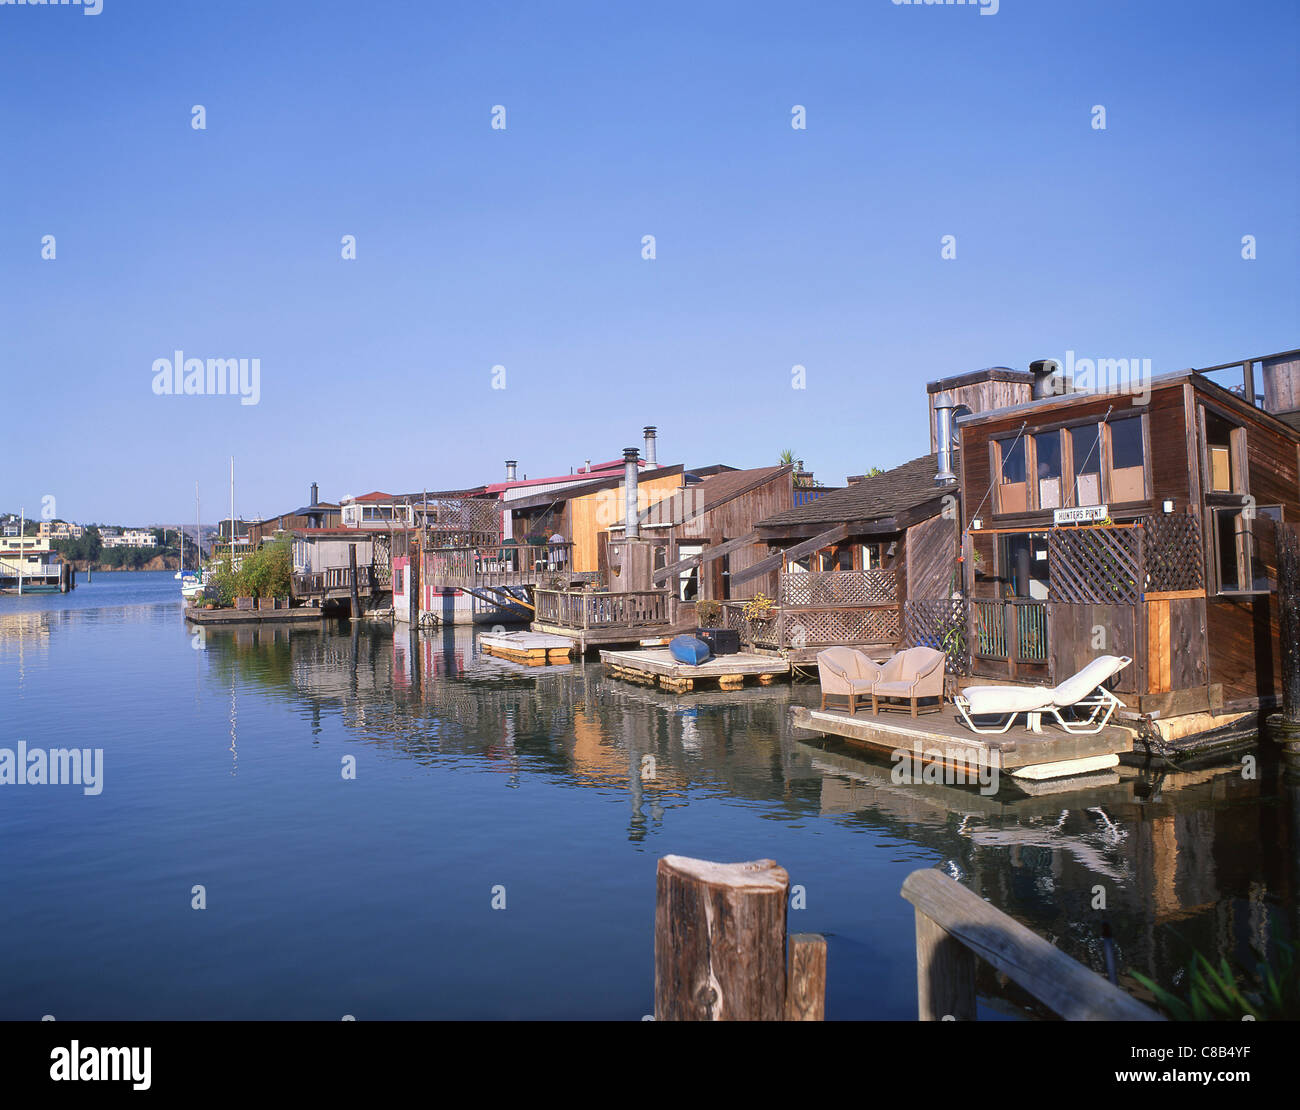 Sausalito Hausboote, Waldo Point Harbor, Sausalito, San Francisco Bay Area, Marin County, Kalifornien, Vereinigte Staaten von Amerika Stockfoto